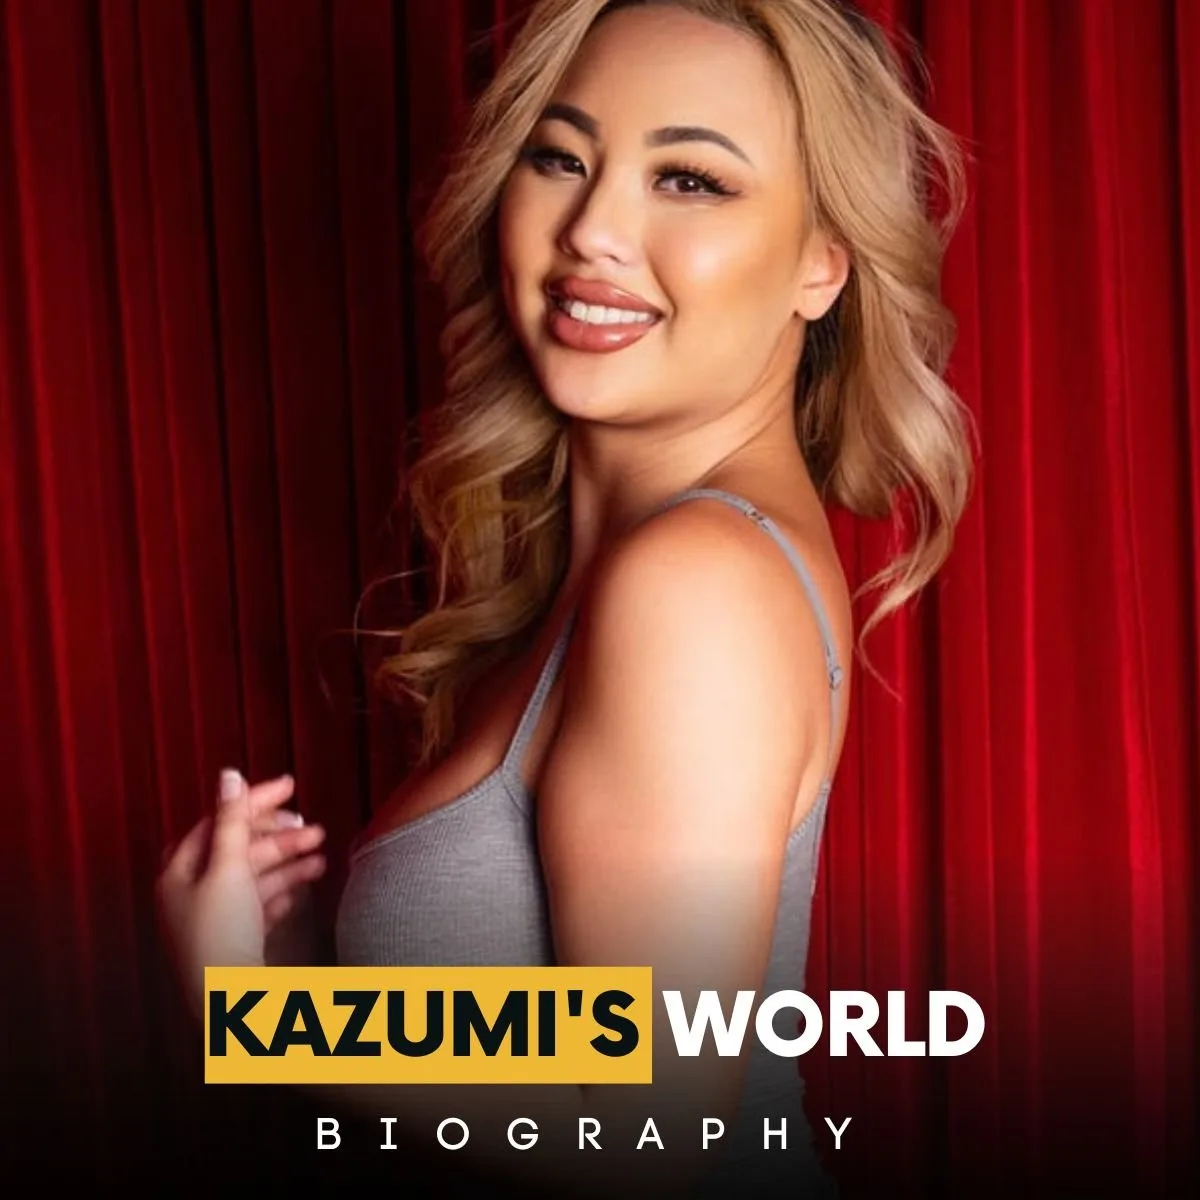 Kazumi's World biography